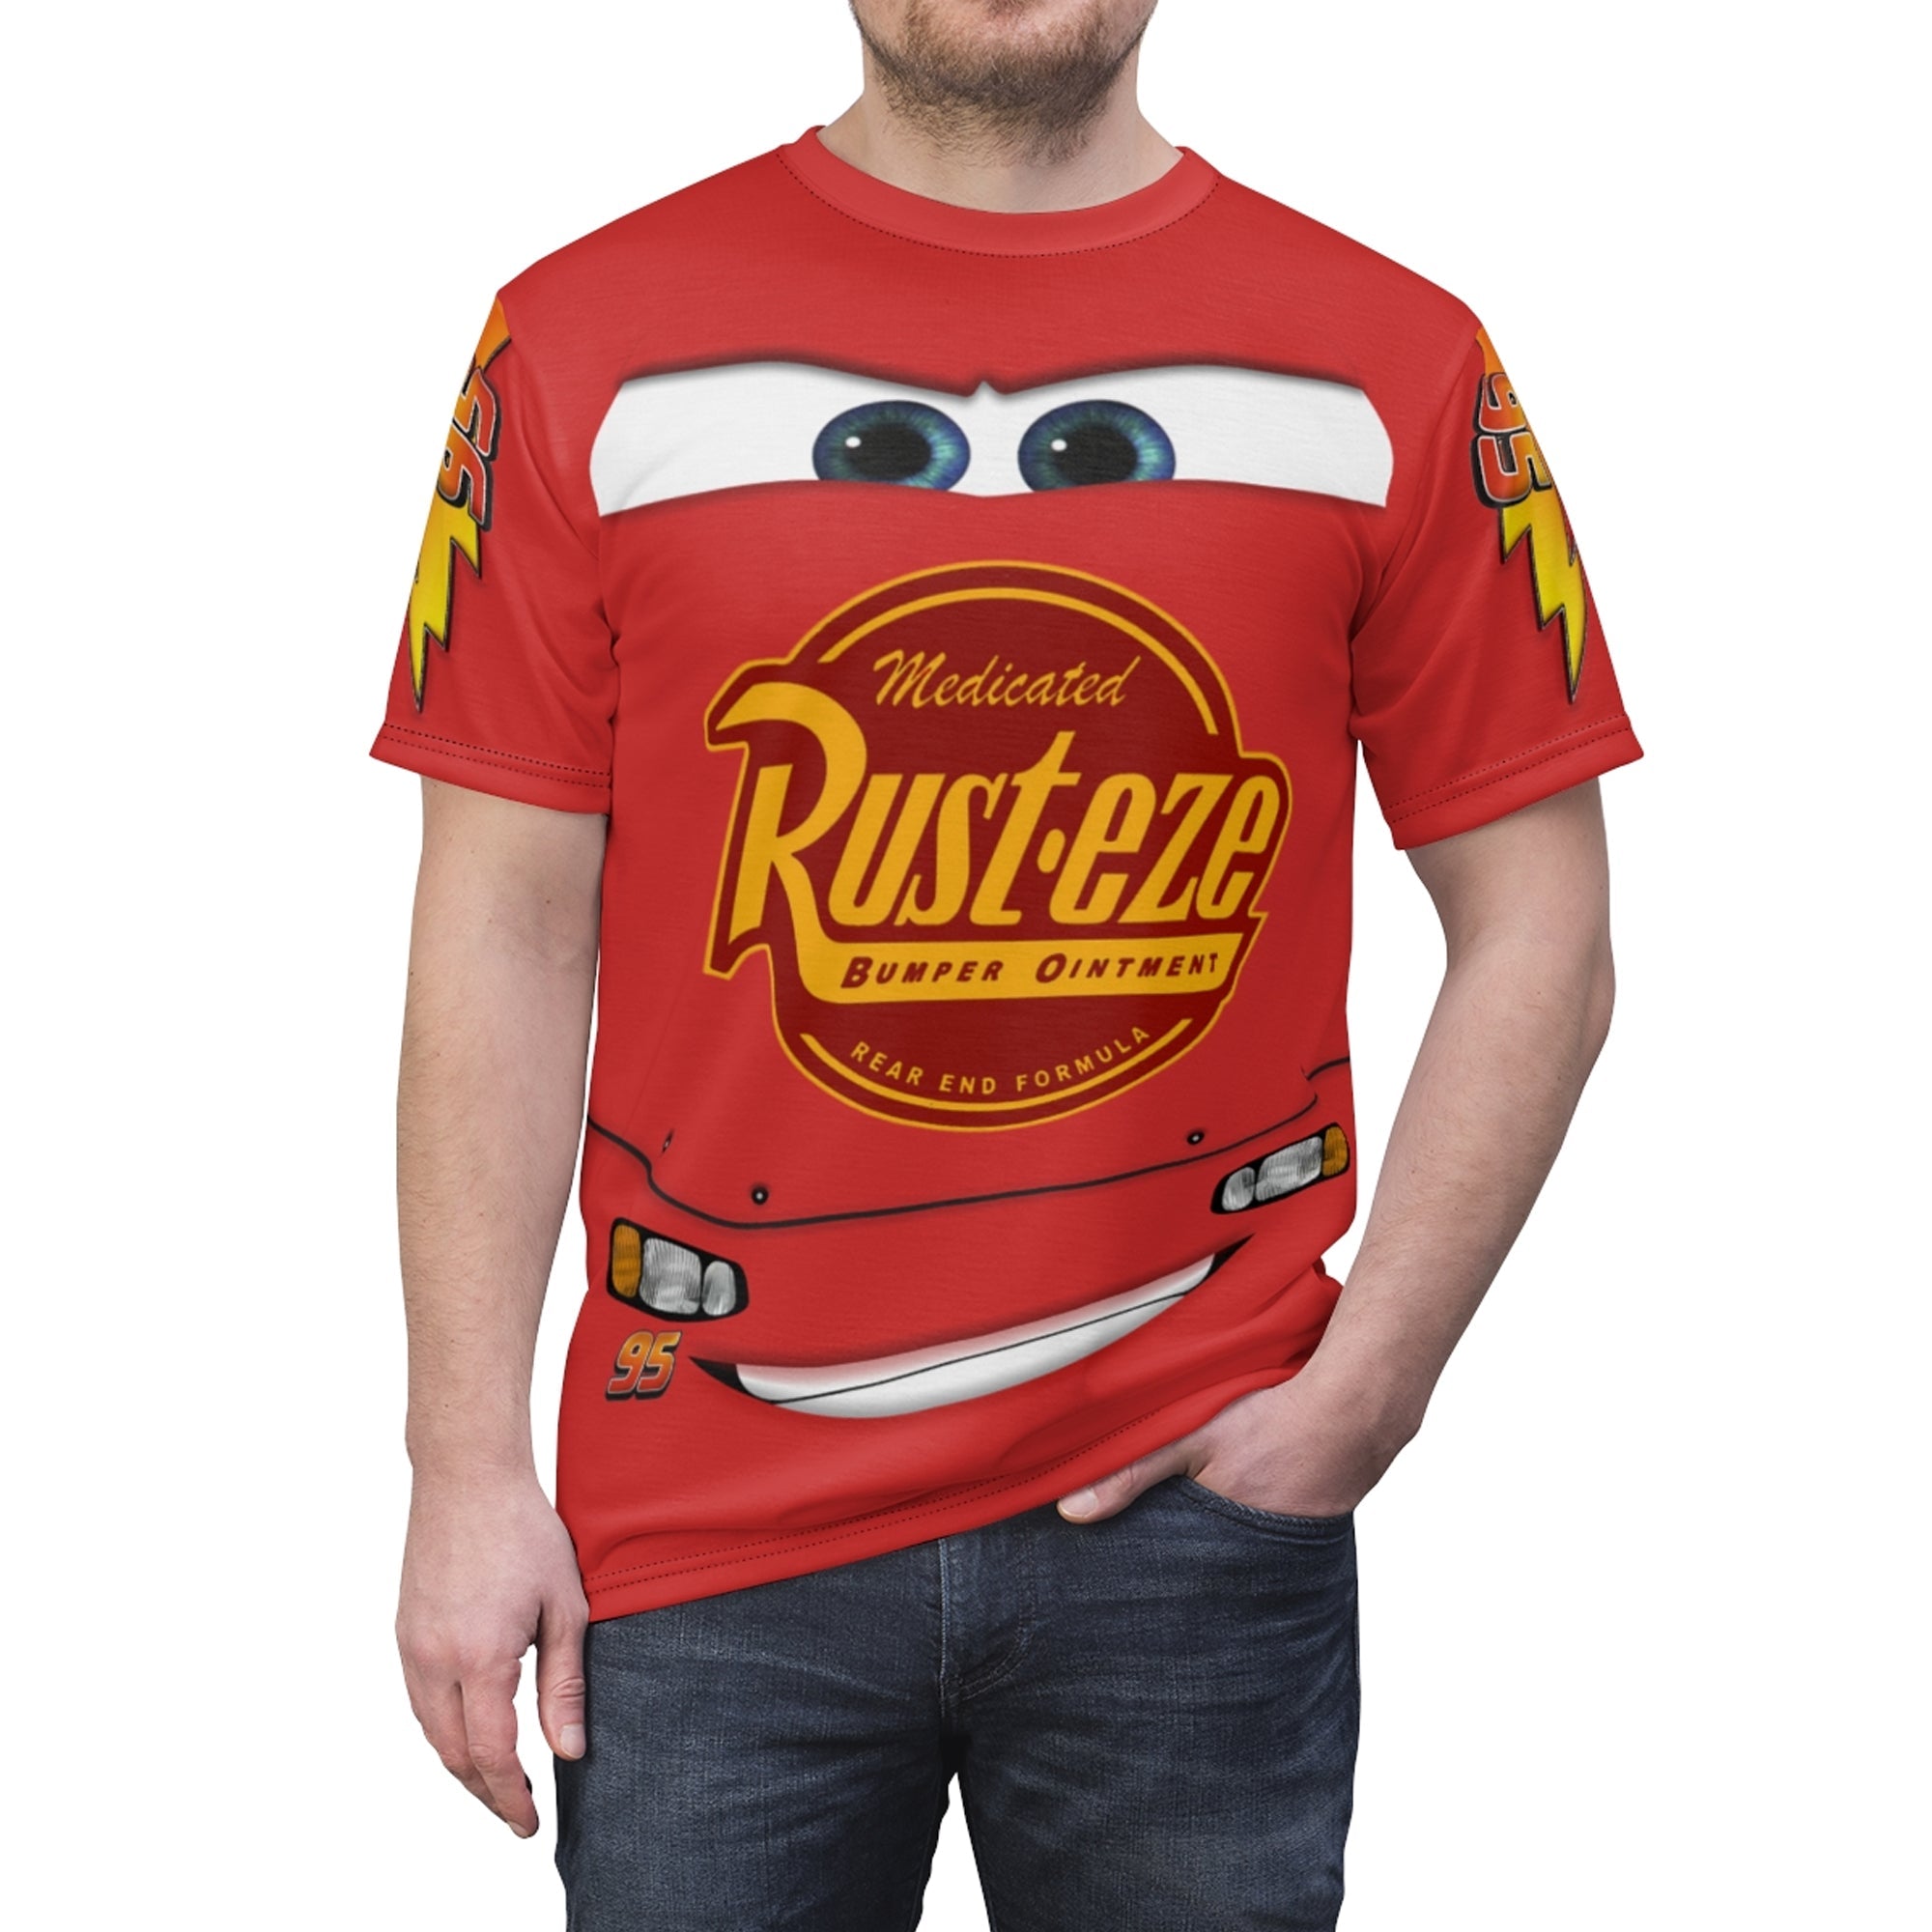 Lightning McQueen Pixar Cars Costume T-Shirt